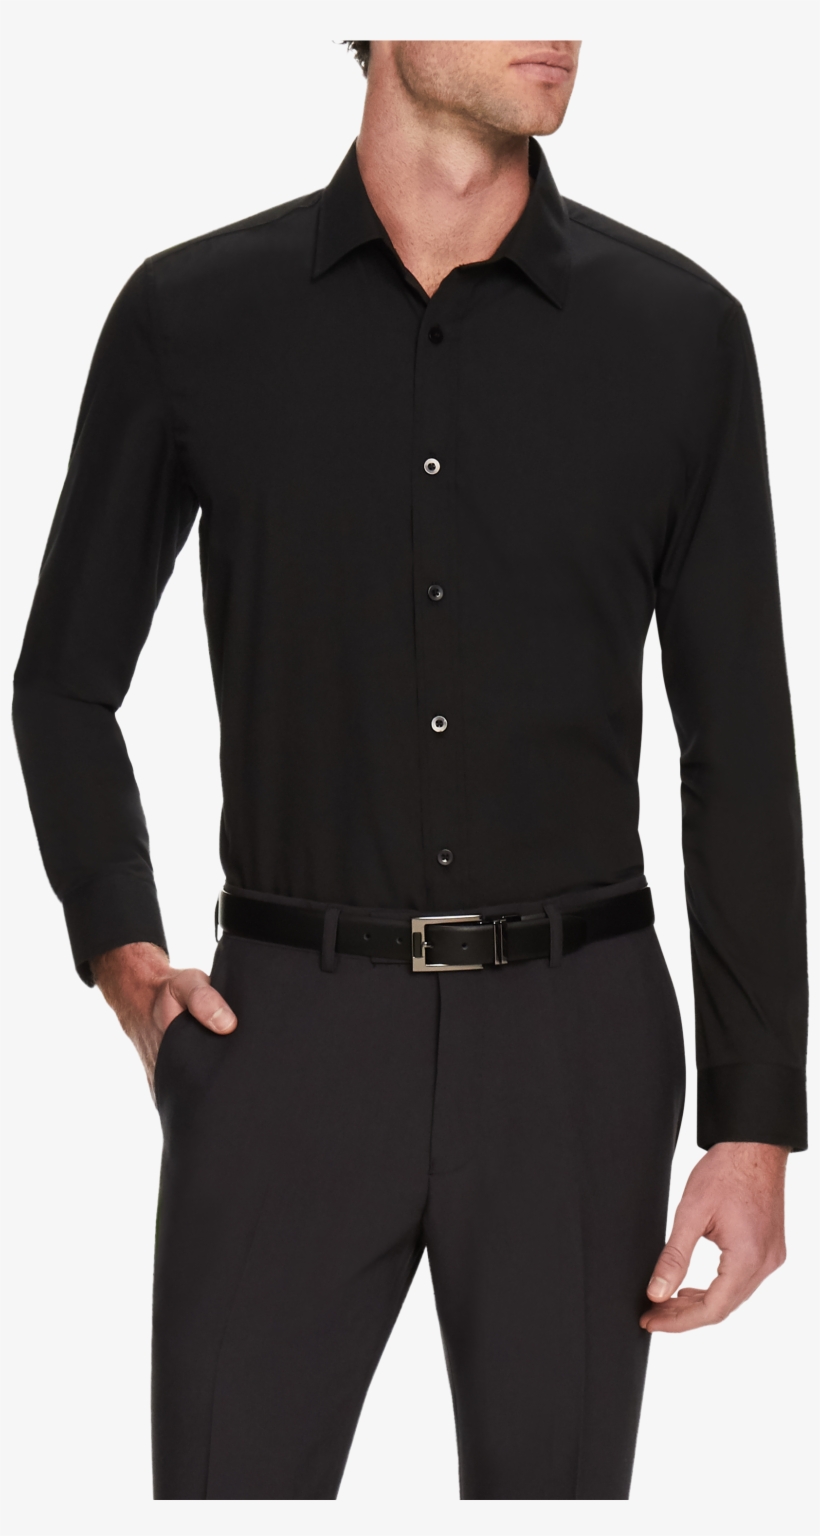 Black Edgar Dress Shirt - Formal Shirts At Edgars, transparent png #8923605